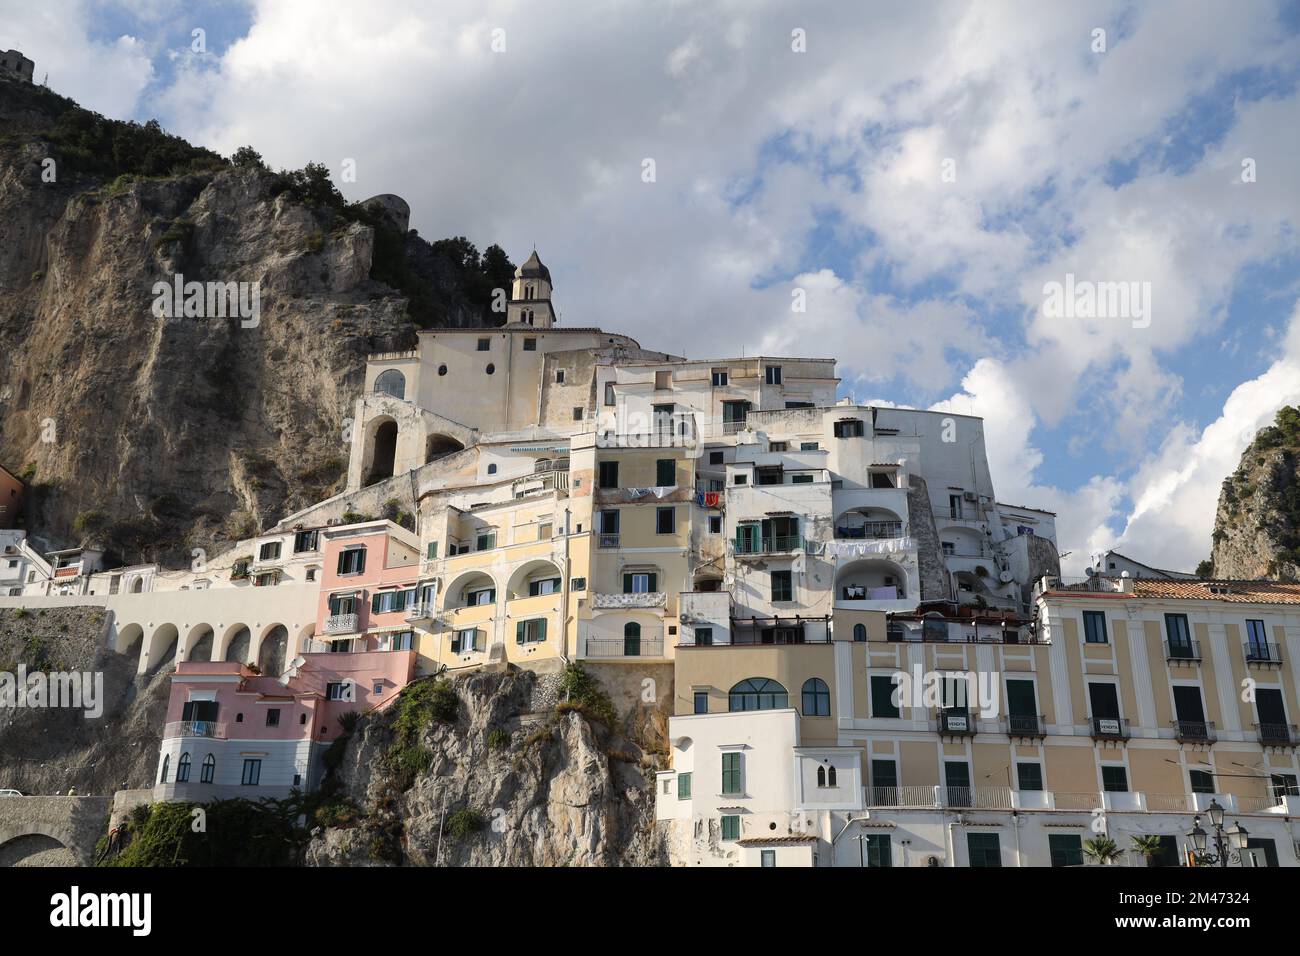 View of Amalfi ancient maritime republic, Italy Stock Photo